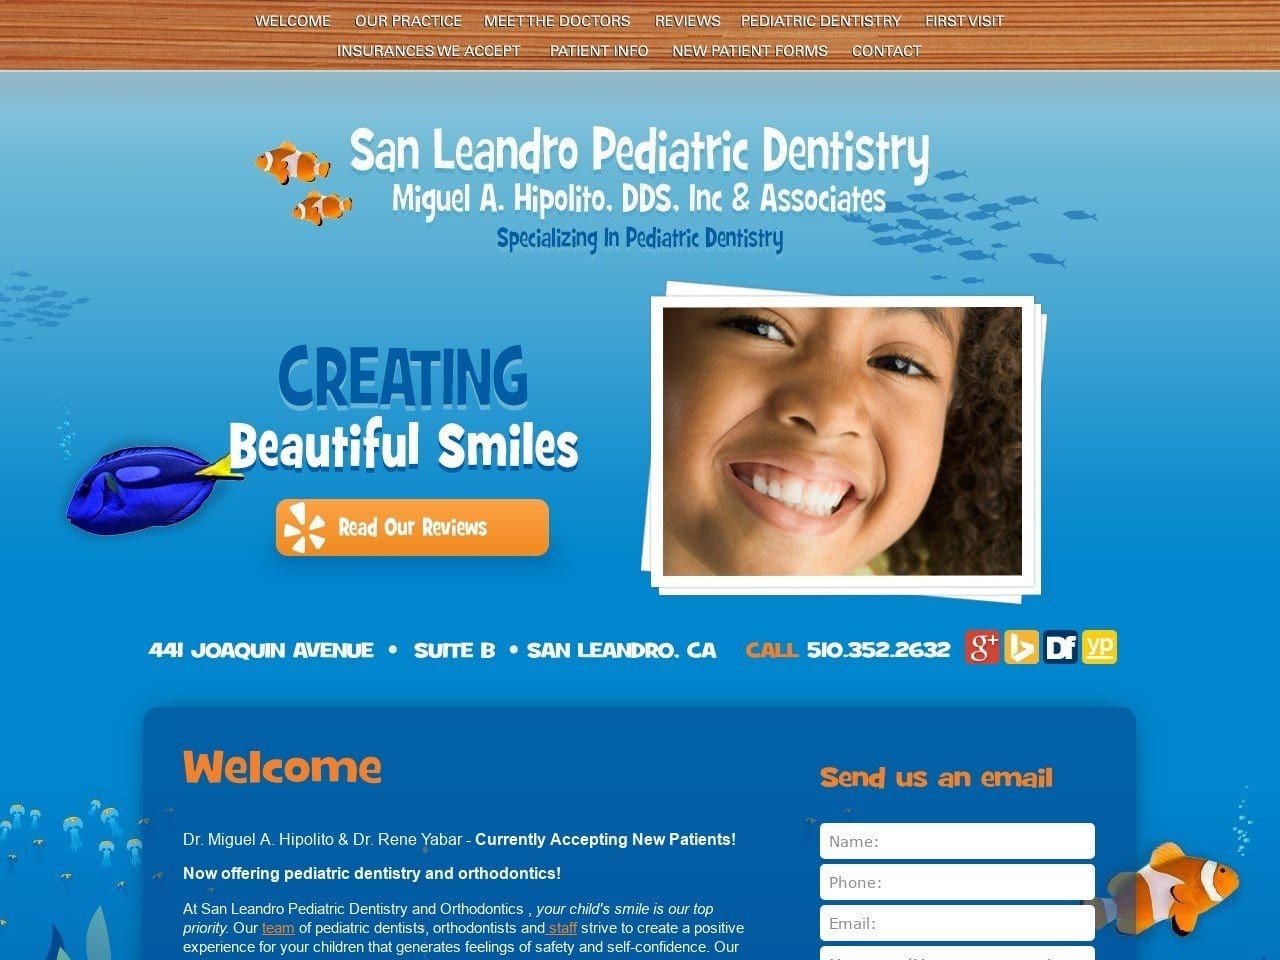 San Leandro Pediatric Dentistry Website Screenshot from sanleandropediatricdentistry.com